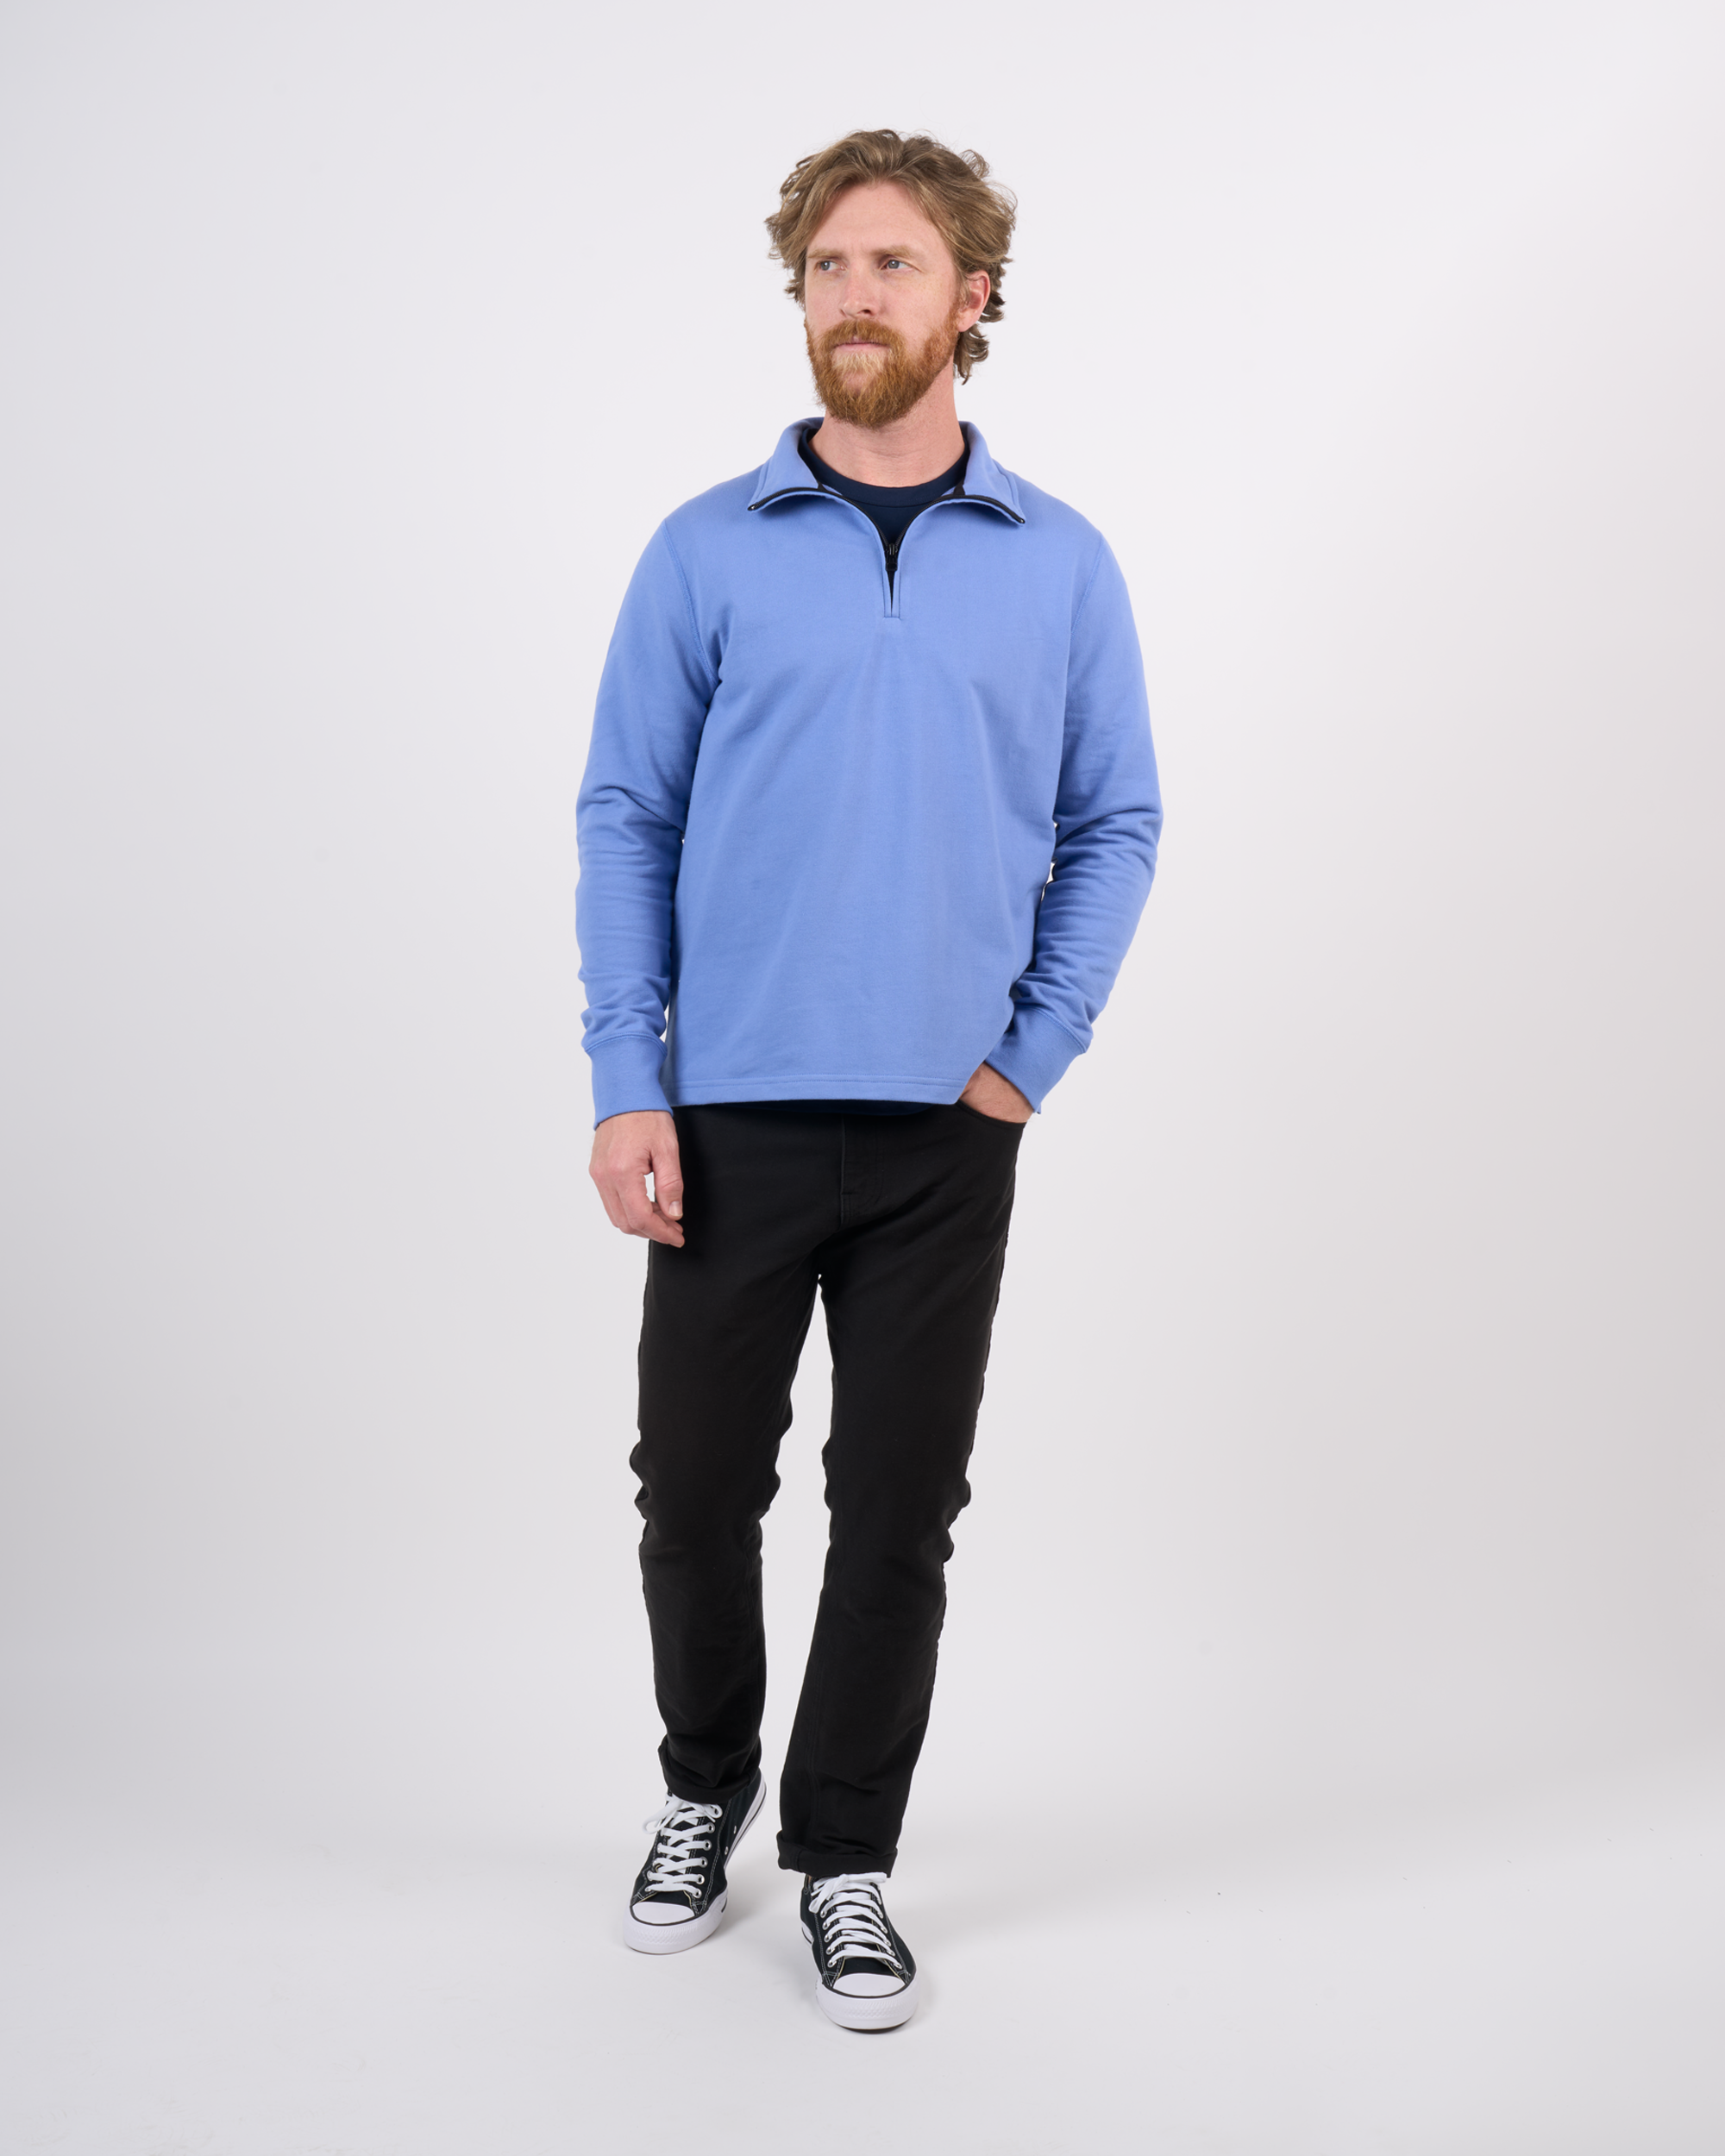 Foreign Rider Co Organic Cotton Surf Blue Quarter Zip Sweater Model Size 3(L)